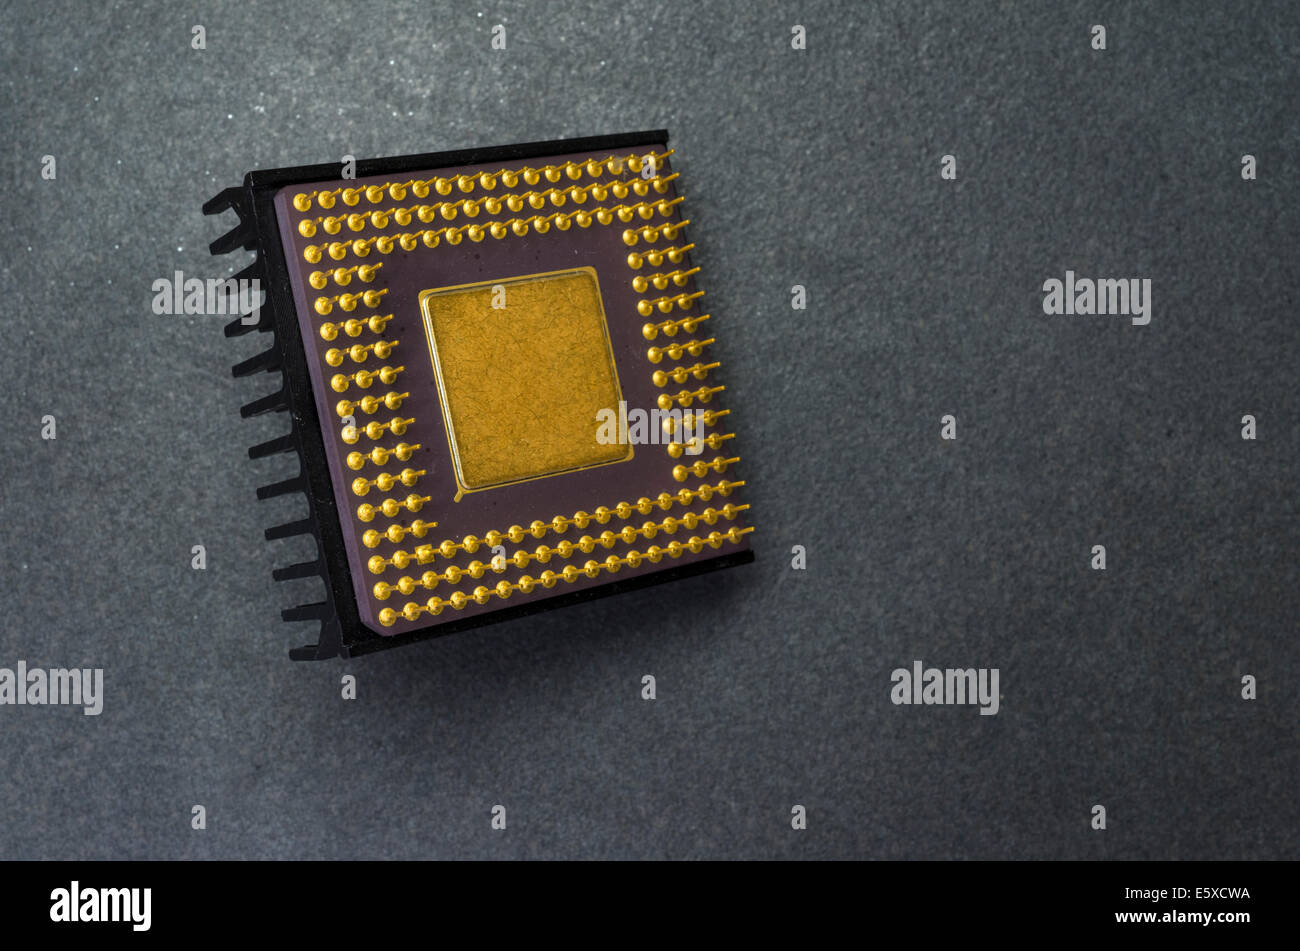 microprocessor close up Stock Photo